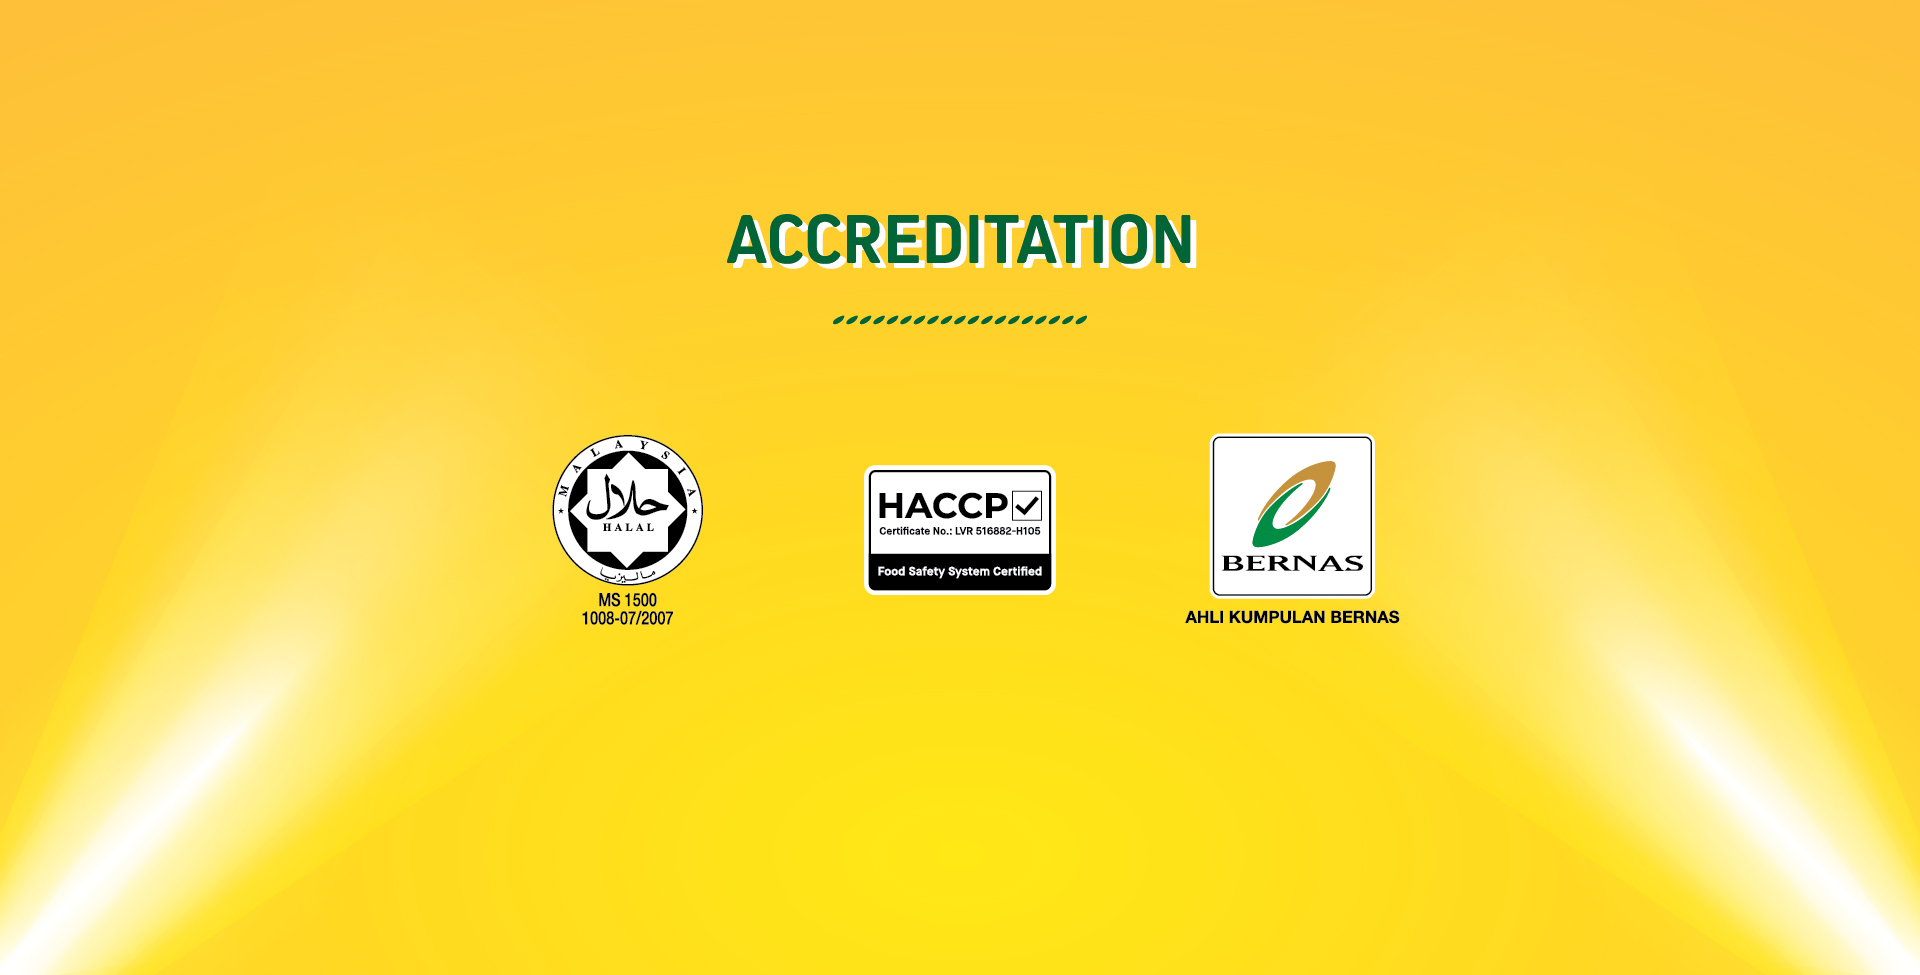 accreditationbanner.jpg